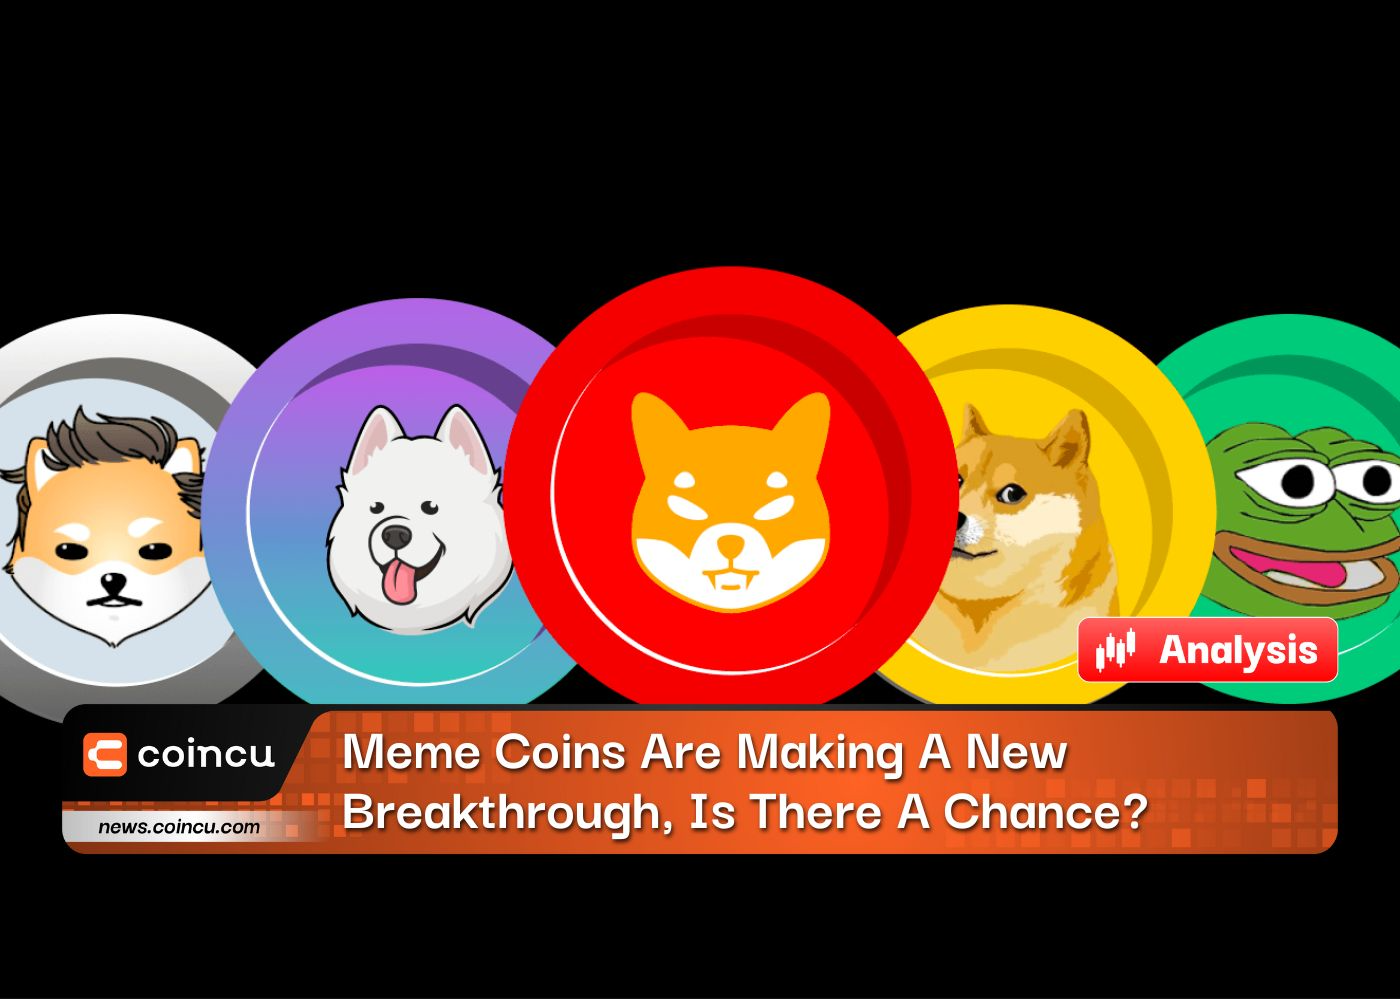 Meme币有新突破，有机会吗？